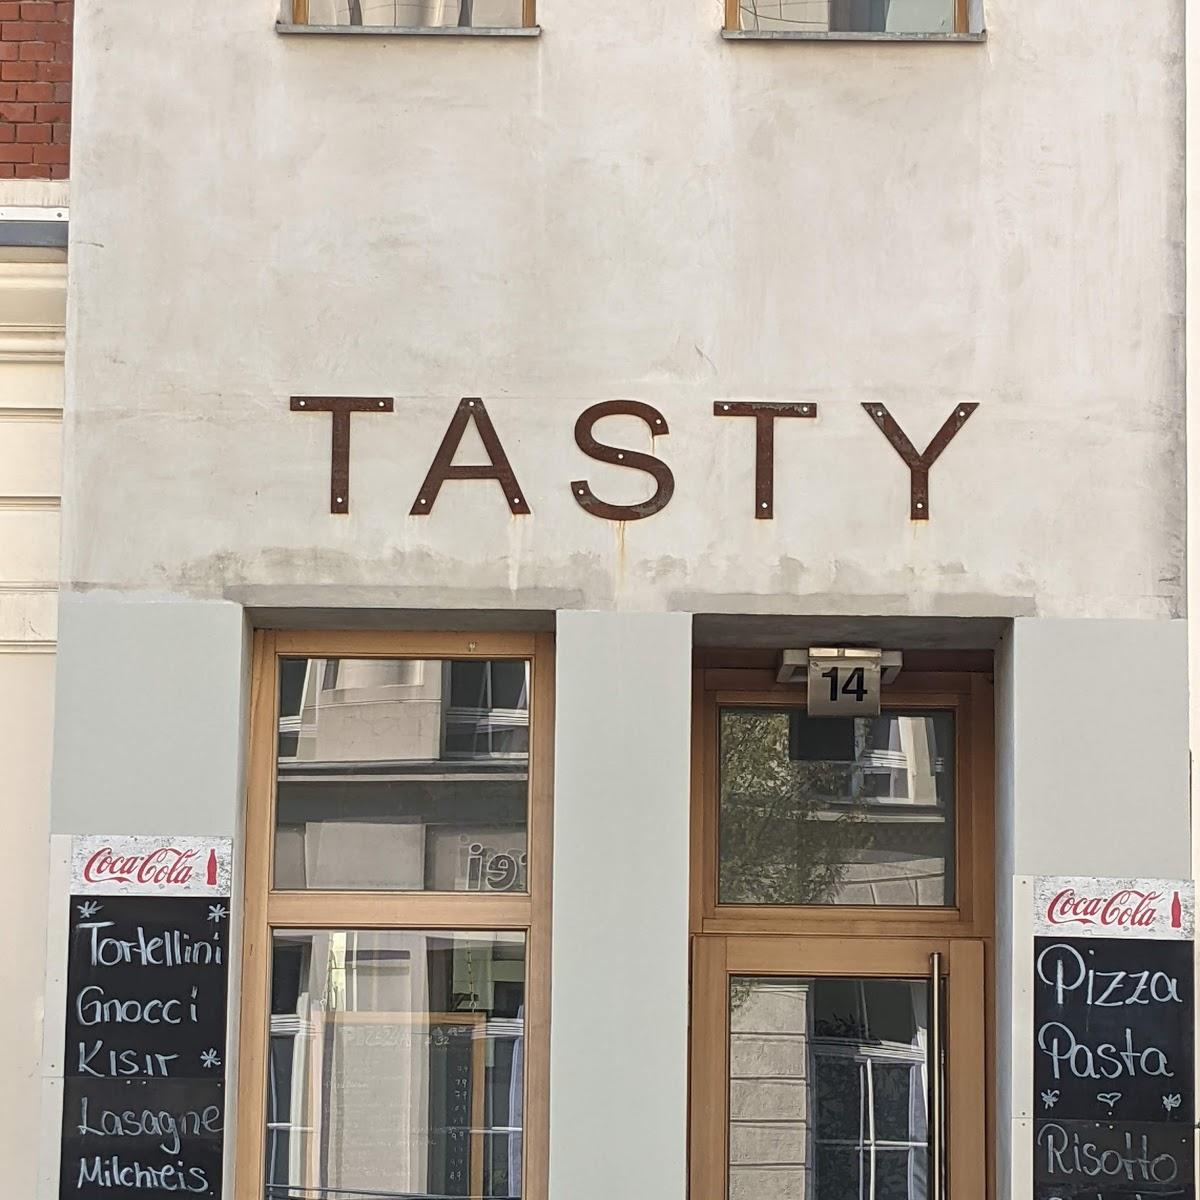 Restaurant "Tasty" in Berlin